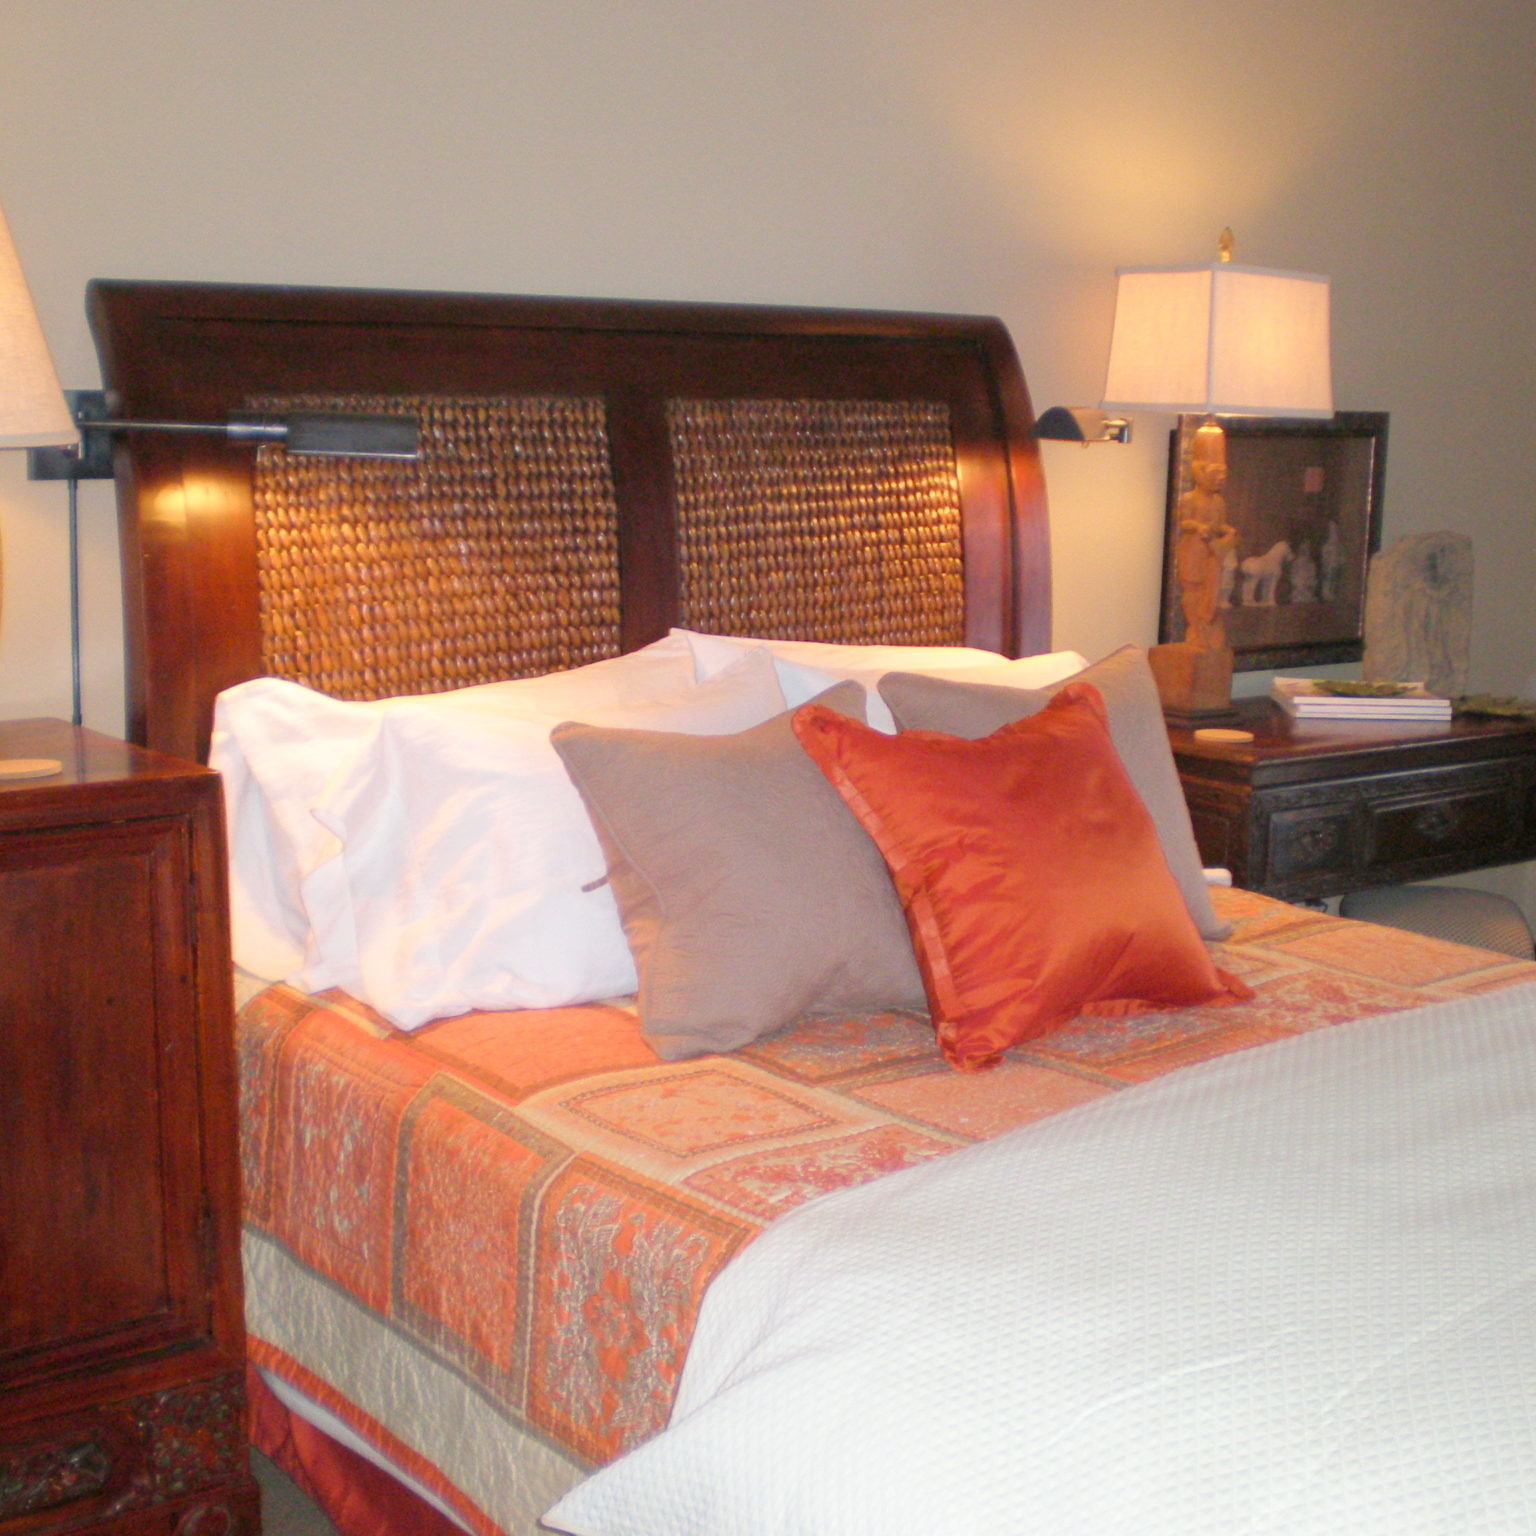 Bedroom interior design with orange silk accents